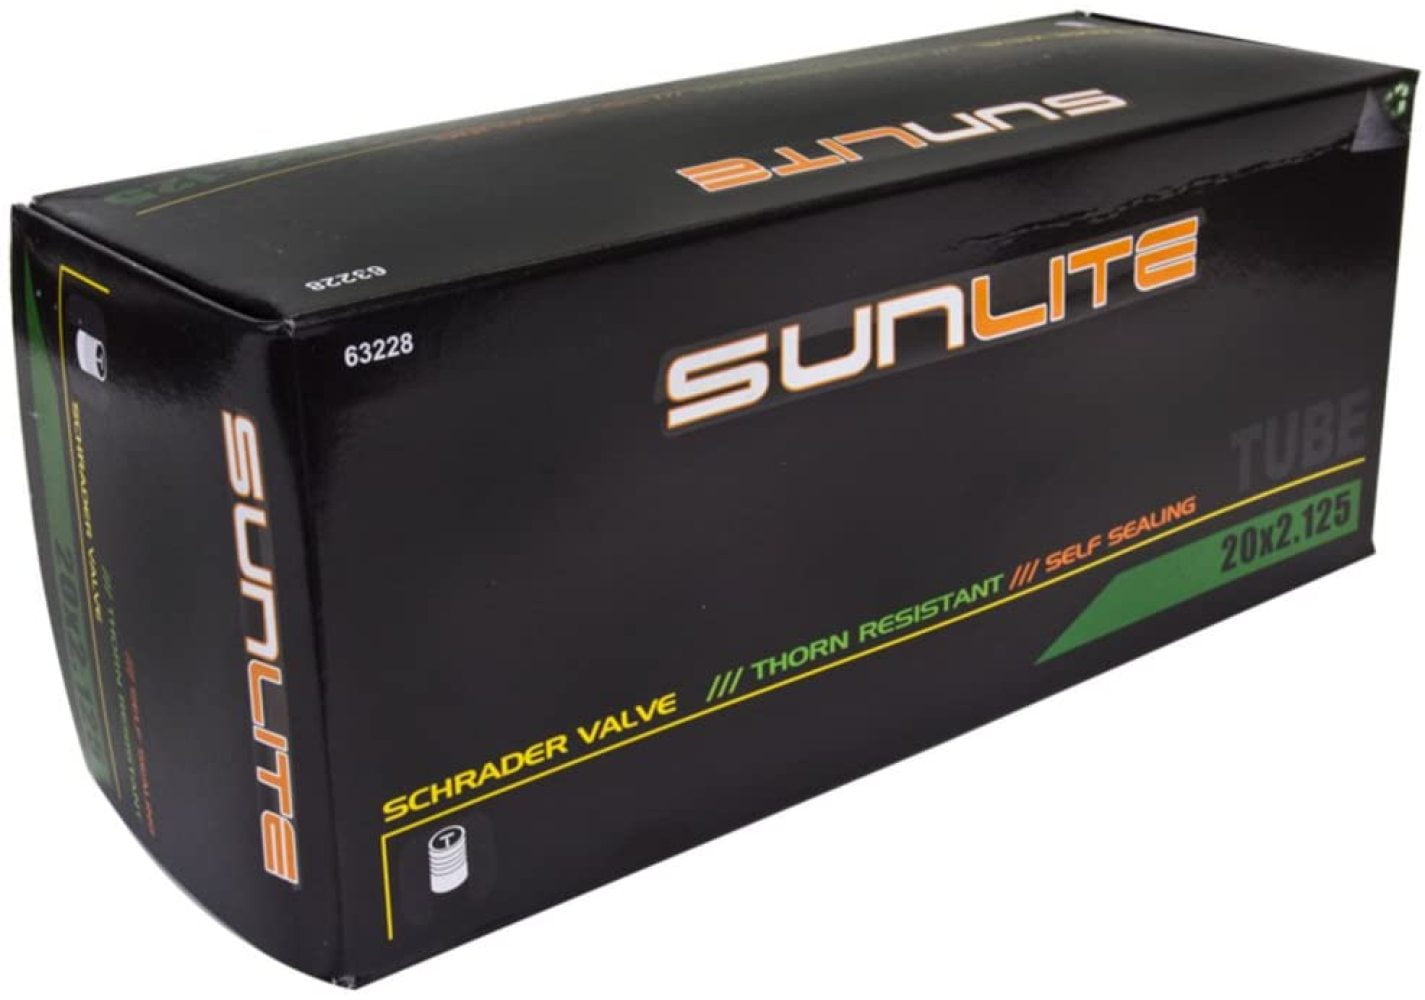 Tube SunLite 14x2.125 Schrader Valve 